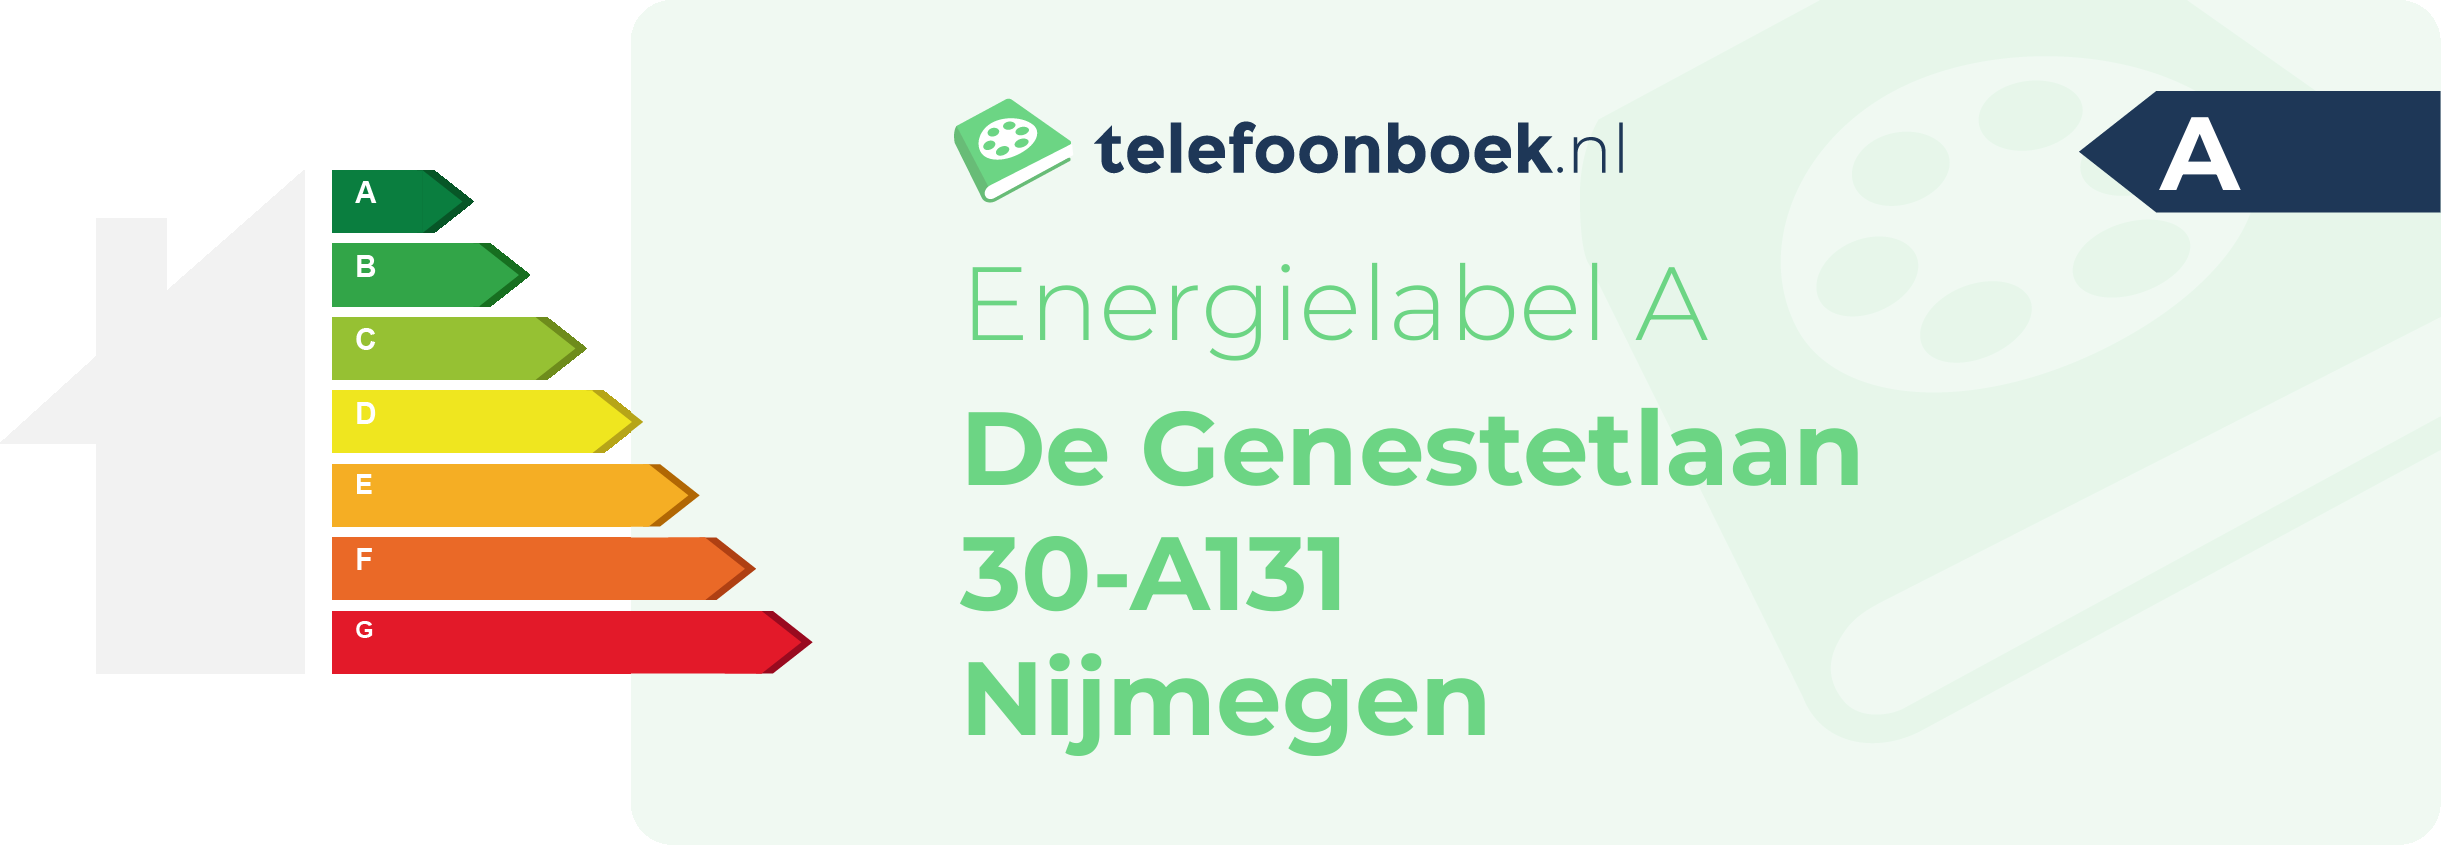 Energielabel De Genestetlaan 30-A131 Nijmegen